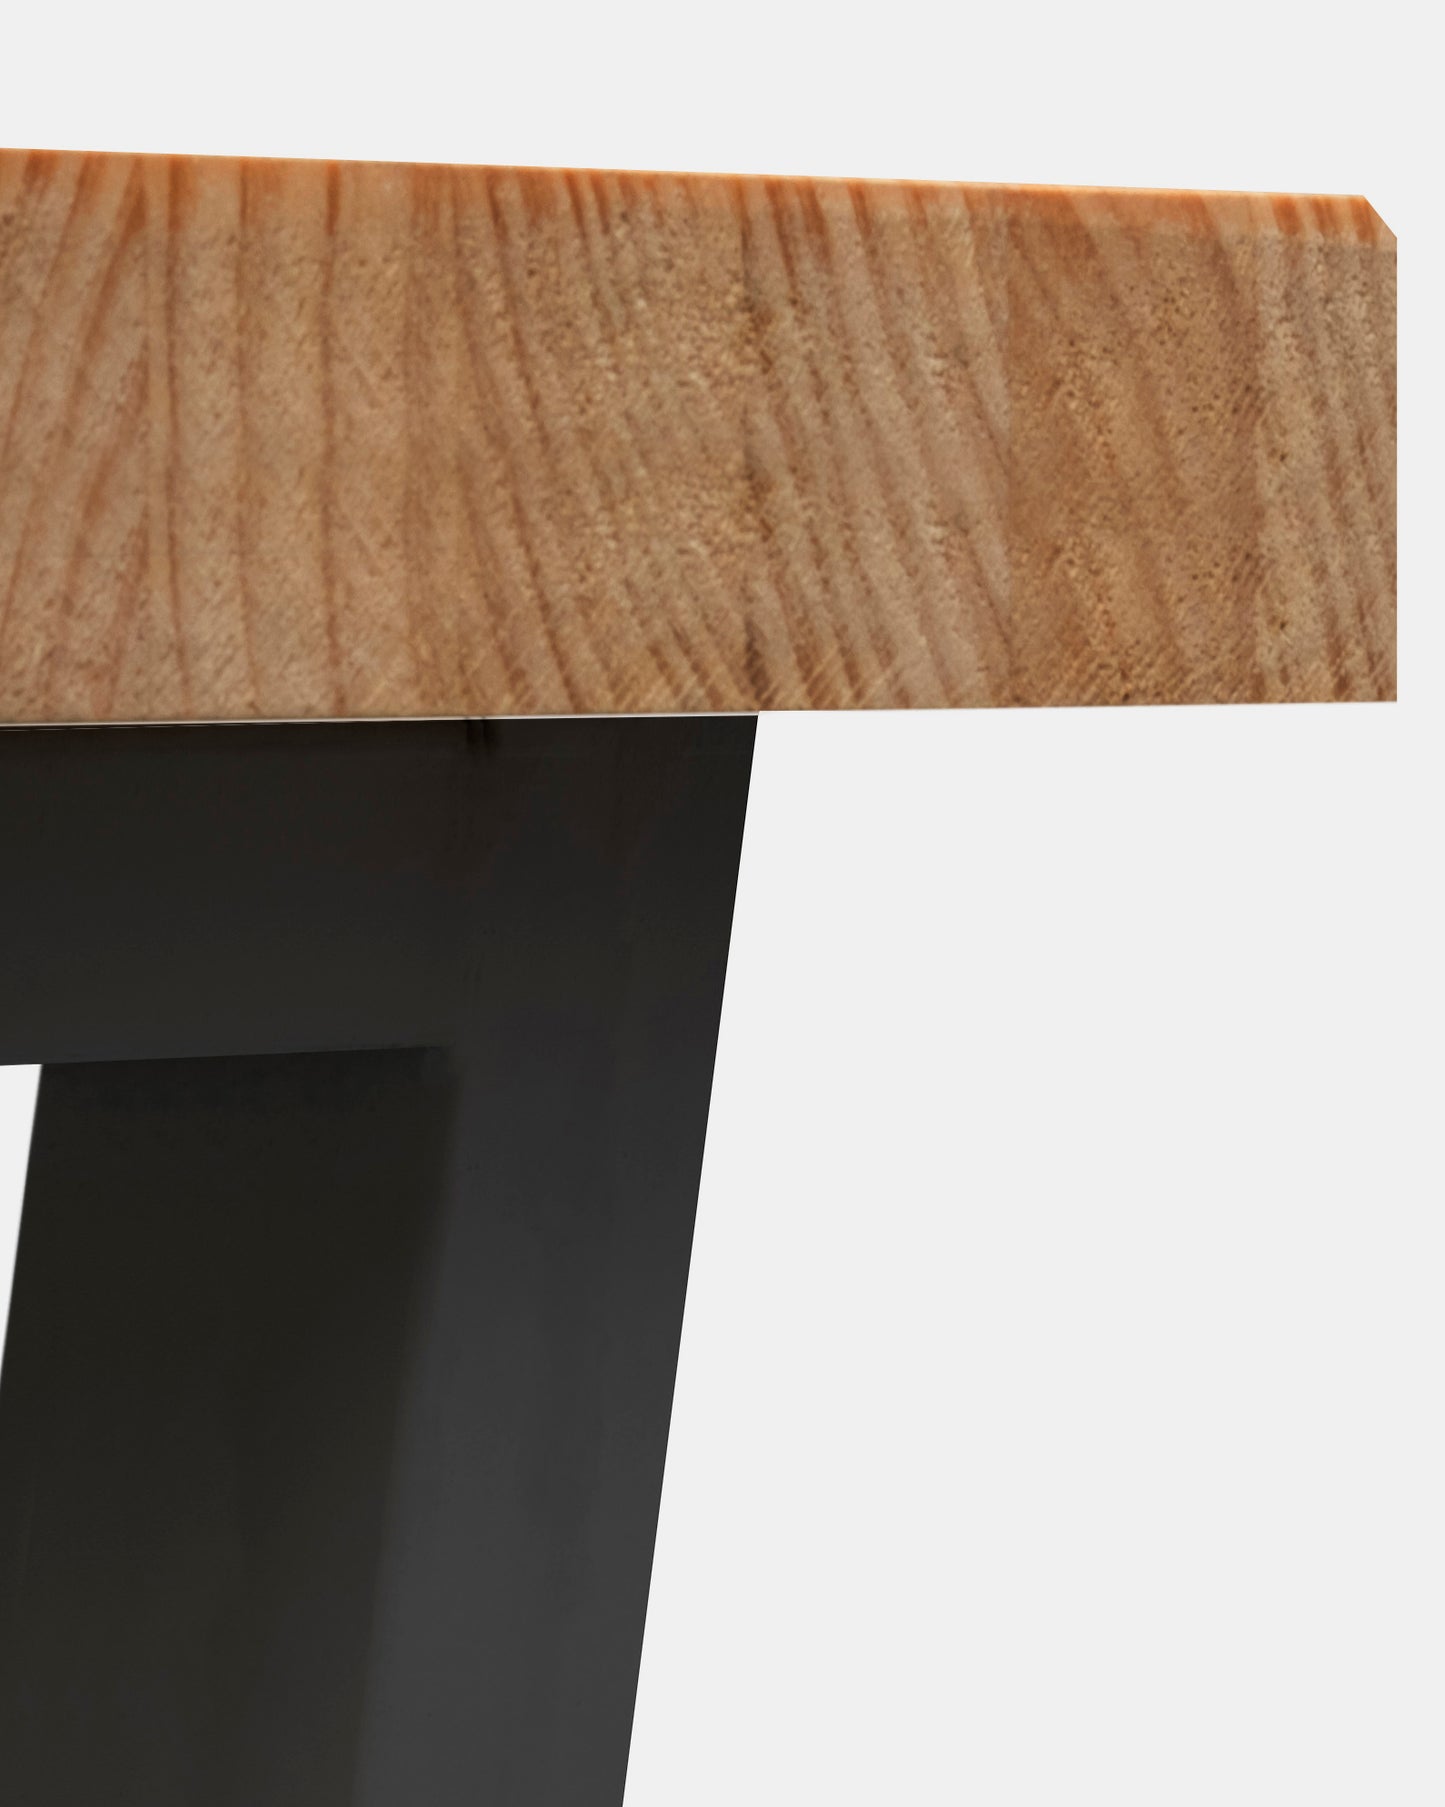 Banco de madera maciza acabado roble oscuro con patas de hierro negras de 180cm - DECOWOOD